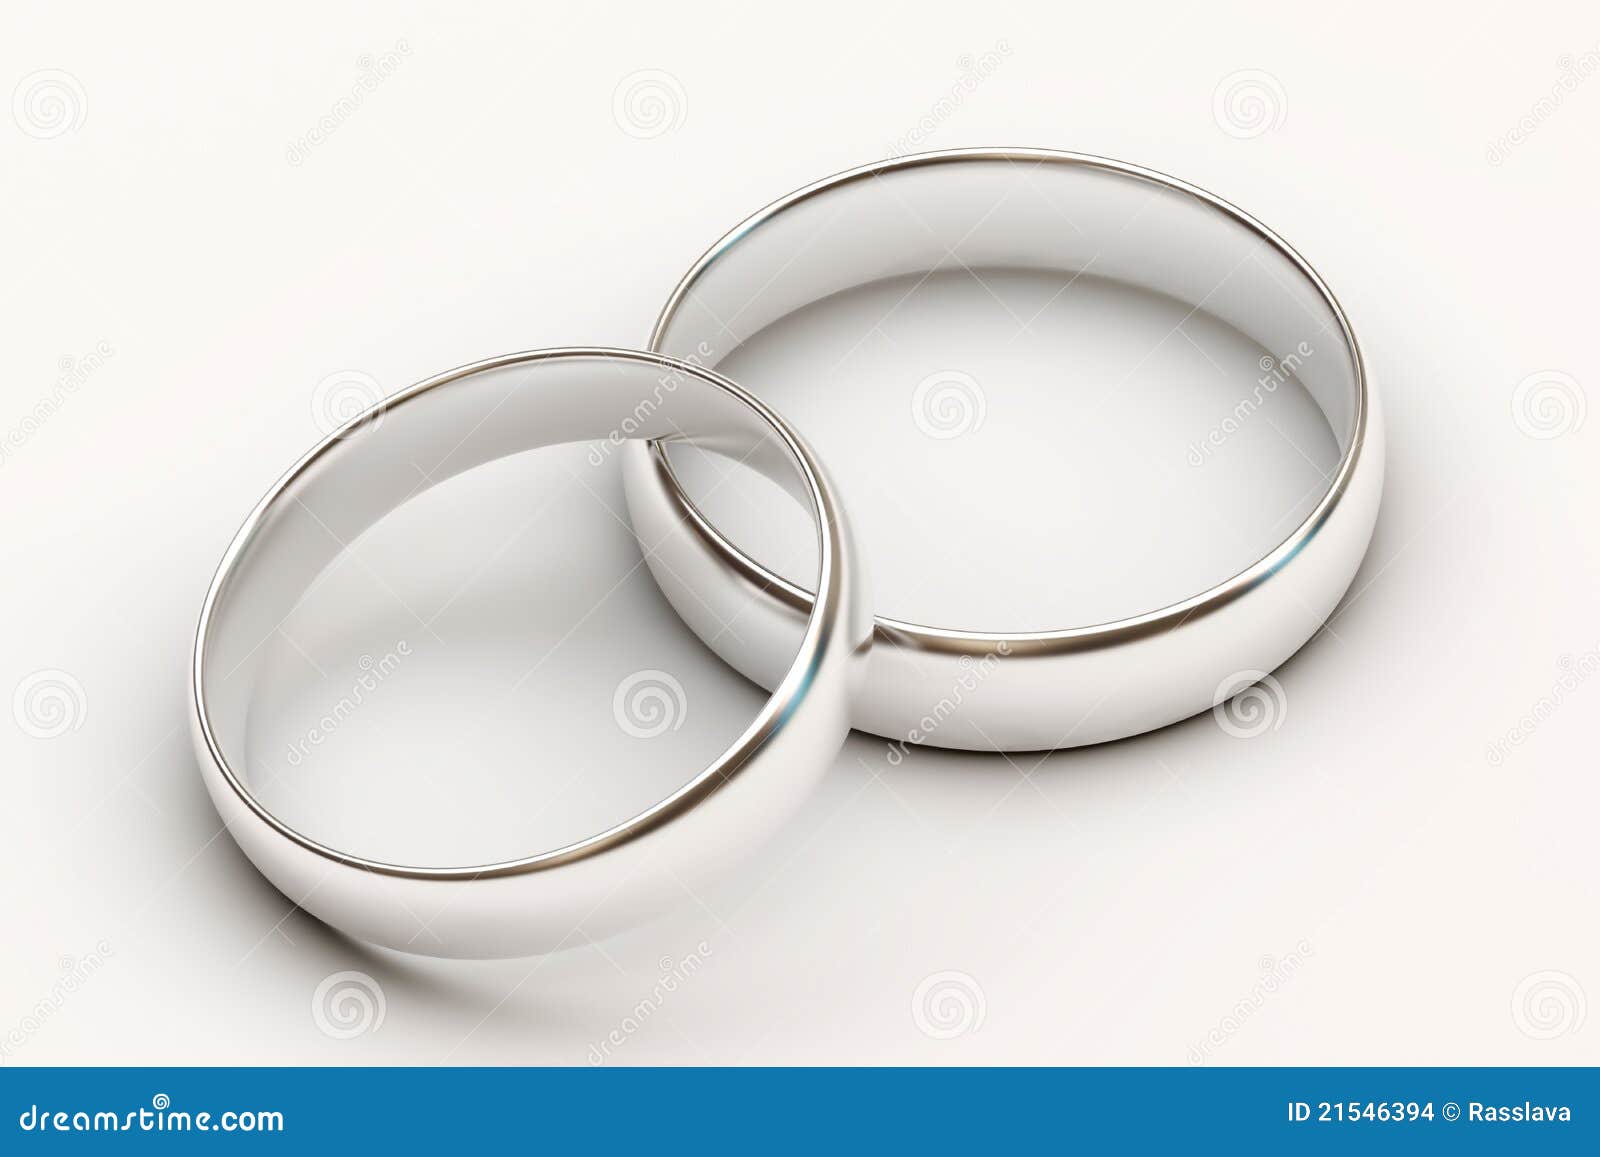 Platinum Wedding  Rings  On White Background  Stock Images  